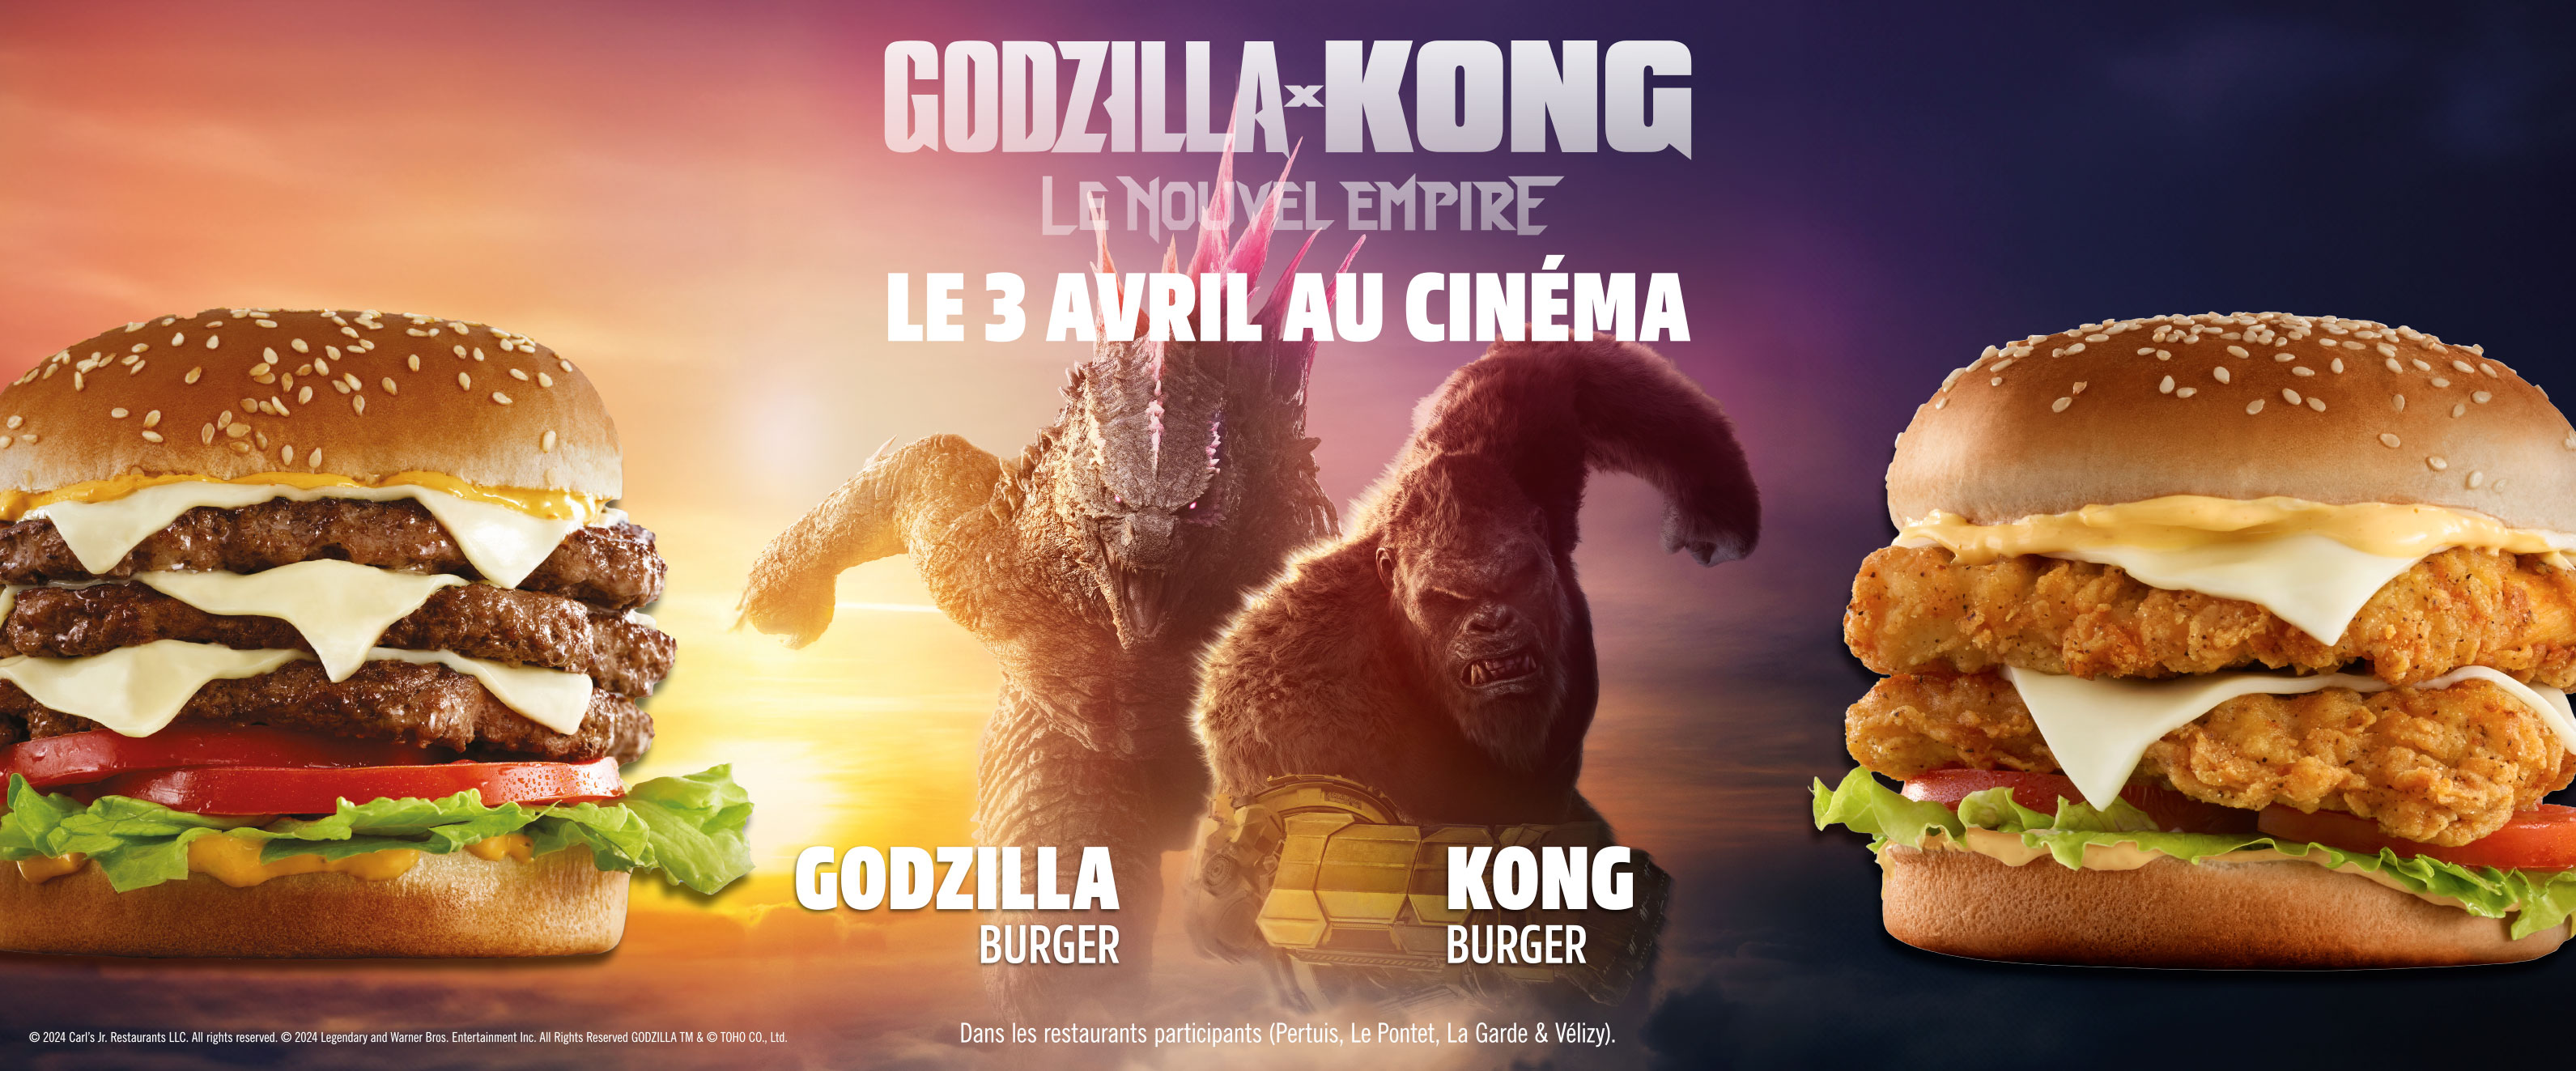 Godzilla - Kong - Le 3 avril au cinéma.